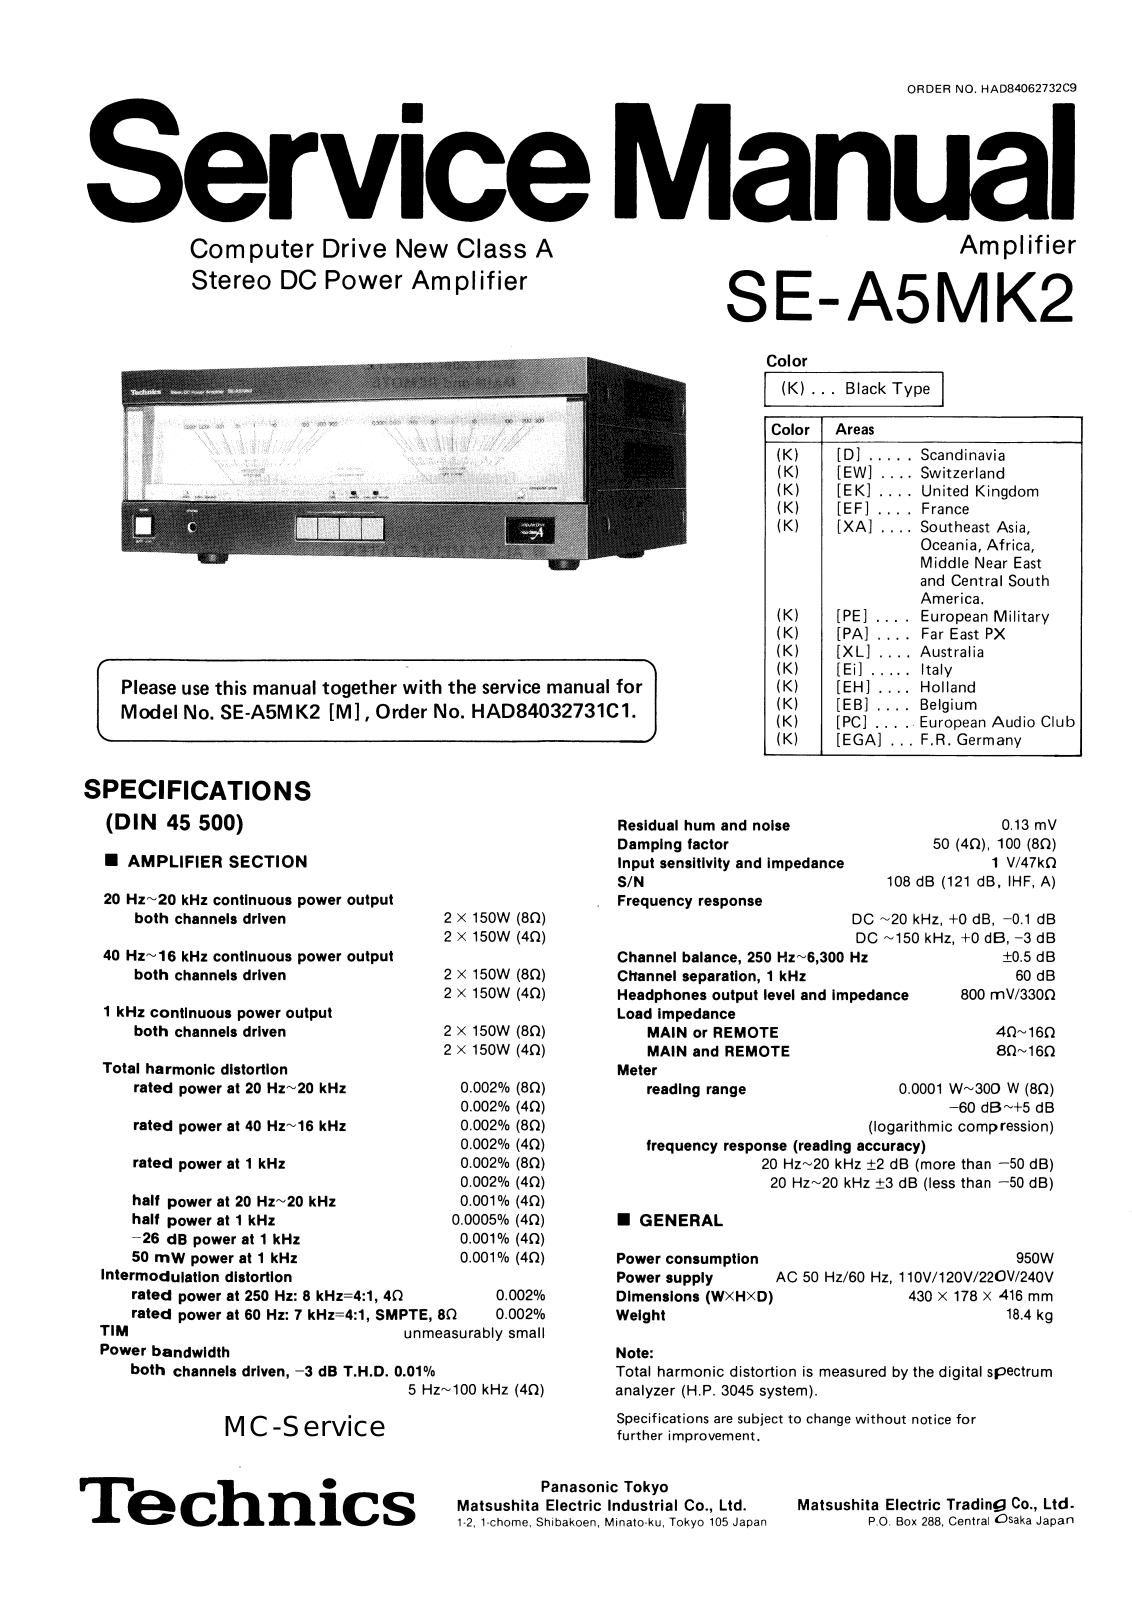 Panasonic SCHT-440, SEA-5 Mk2 Owners manual